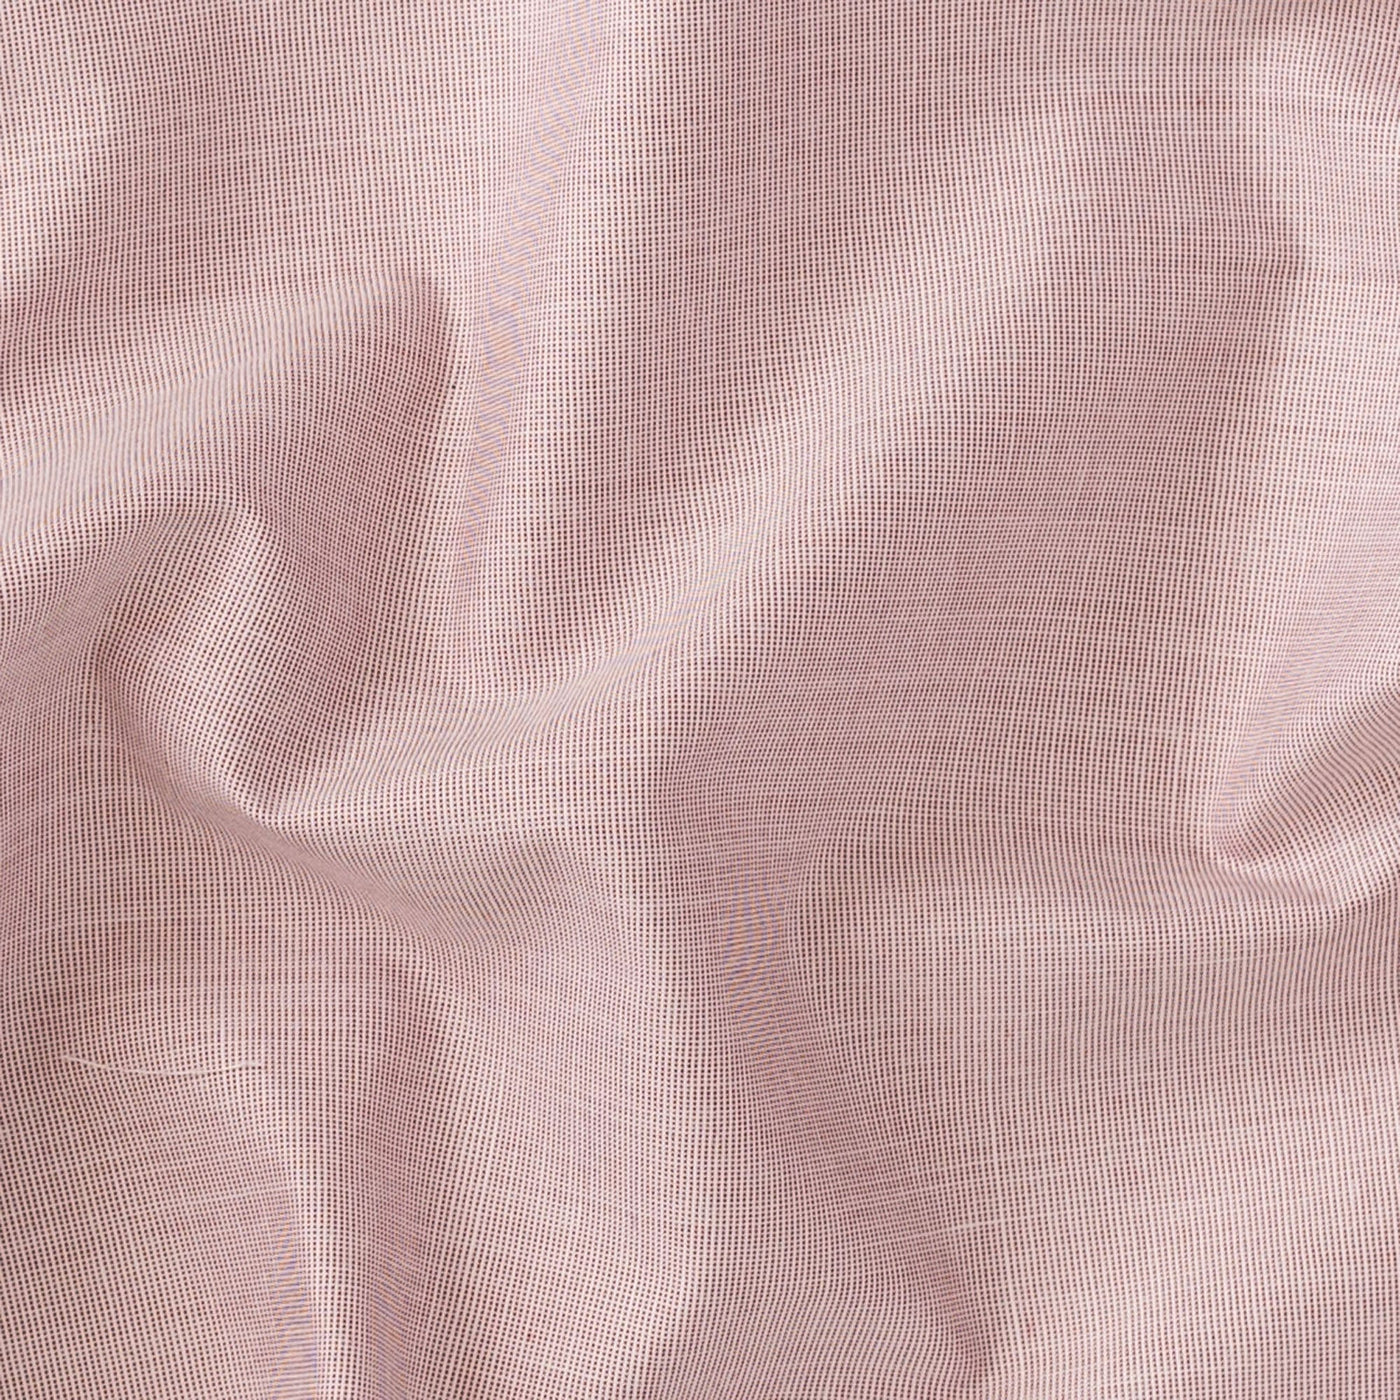 Fabric Pandit Cut Piece (CUT PIECE) Pastel Violet Cotton Yarn Dyed Fabric (Width 58 inch)